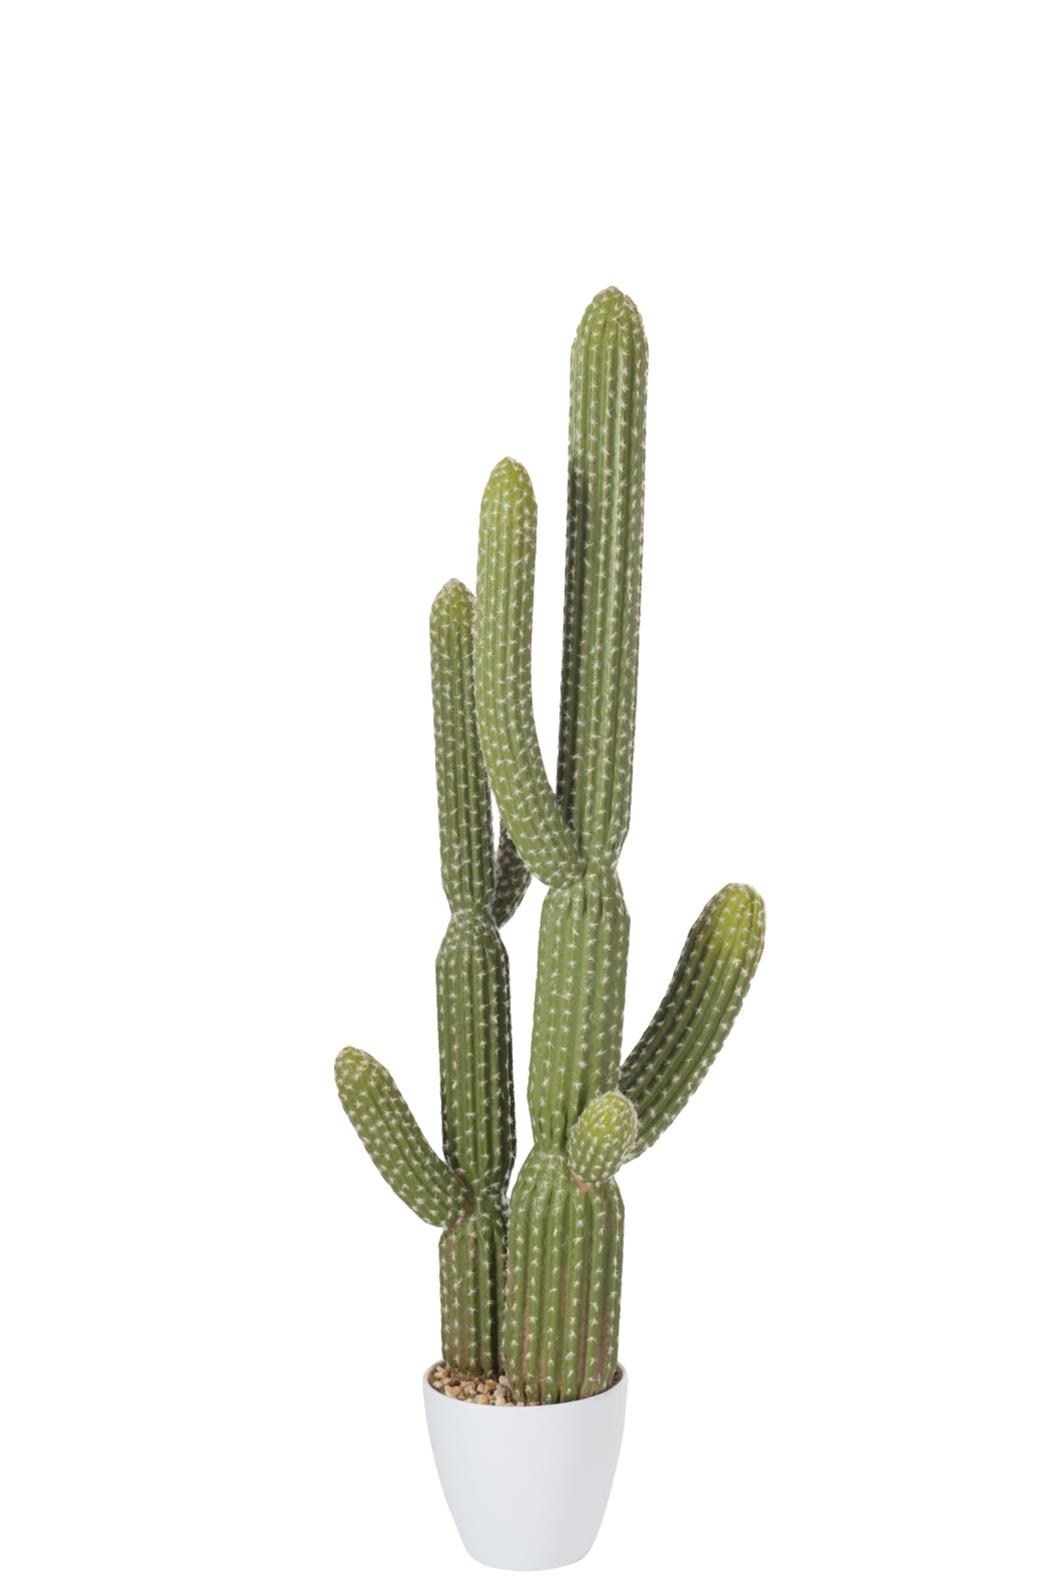 Deko Kaktus